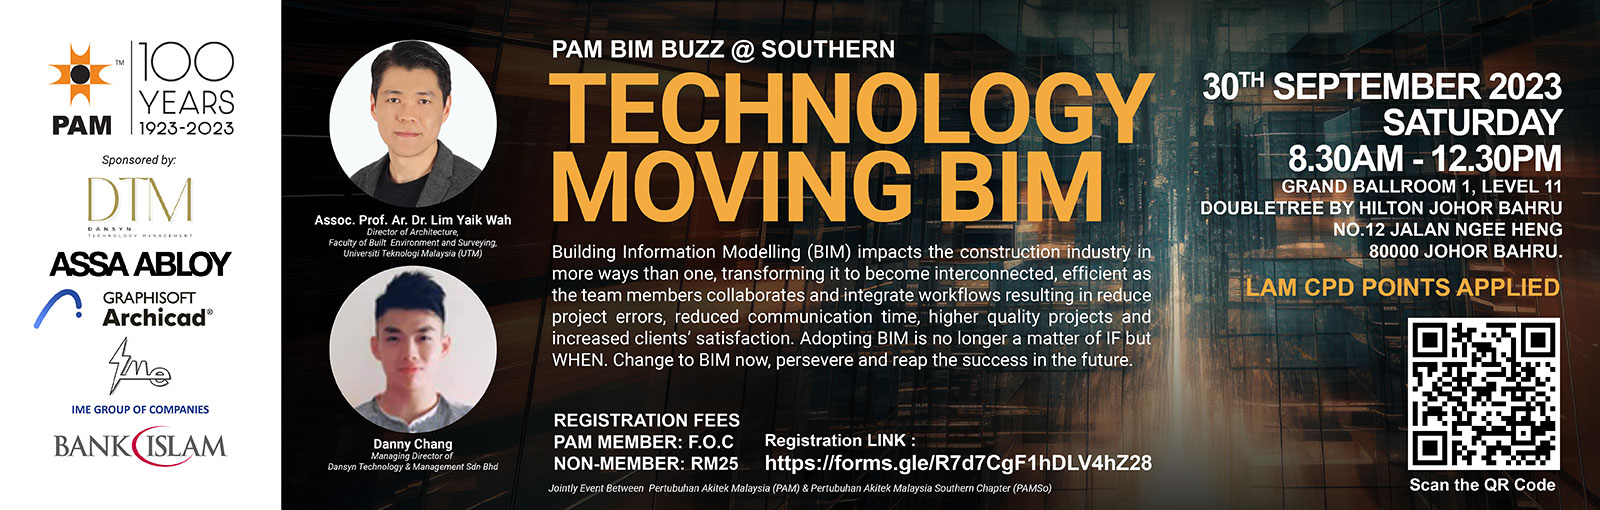 PAM BIM Buzz @ Southern 